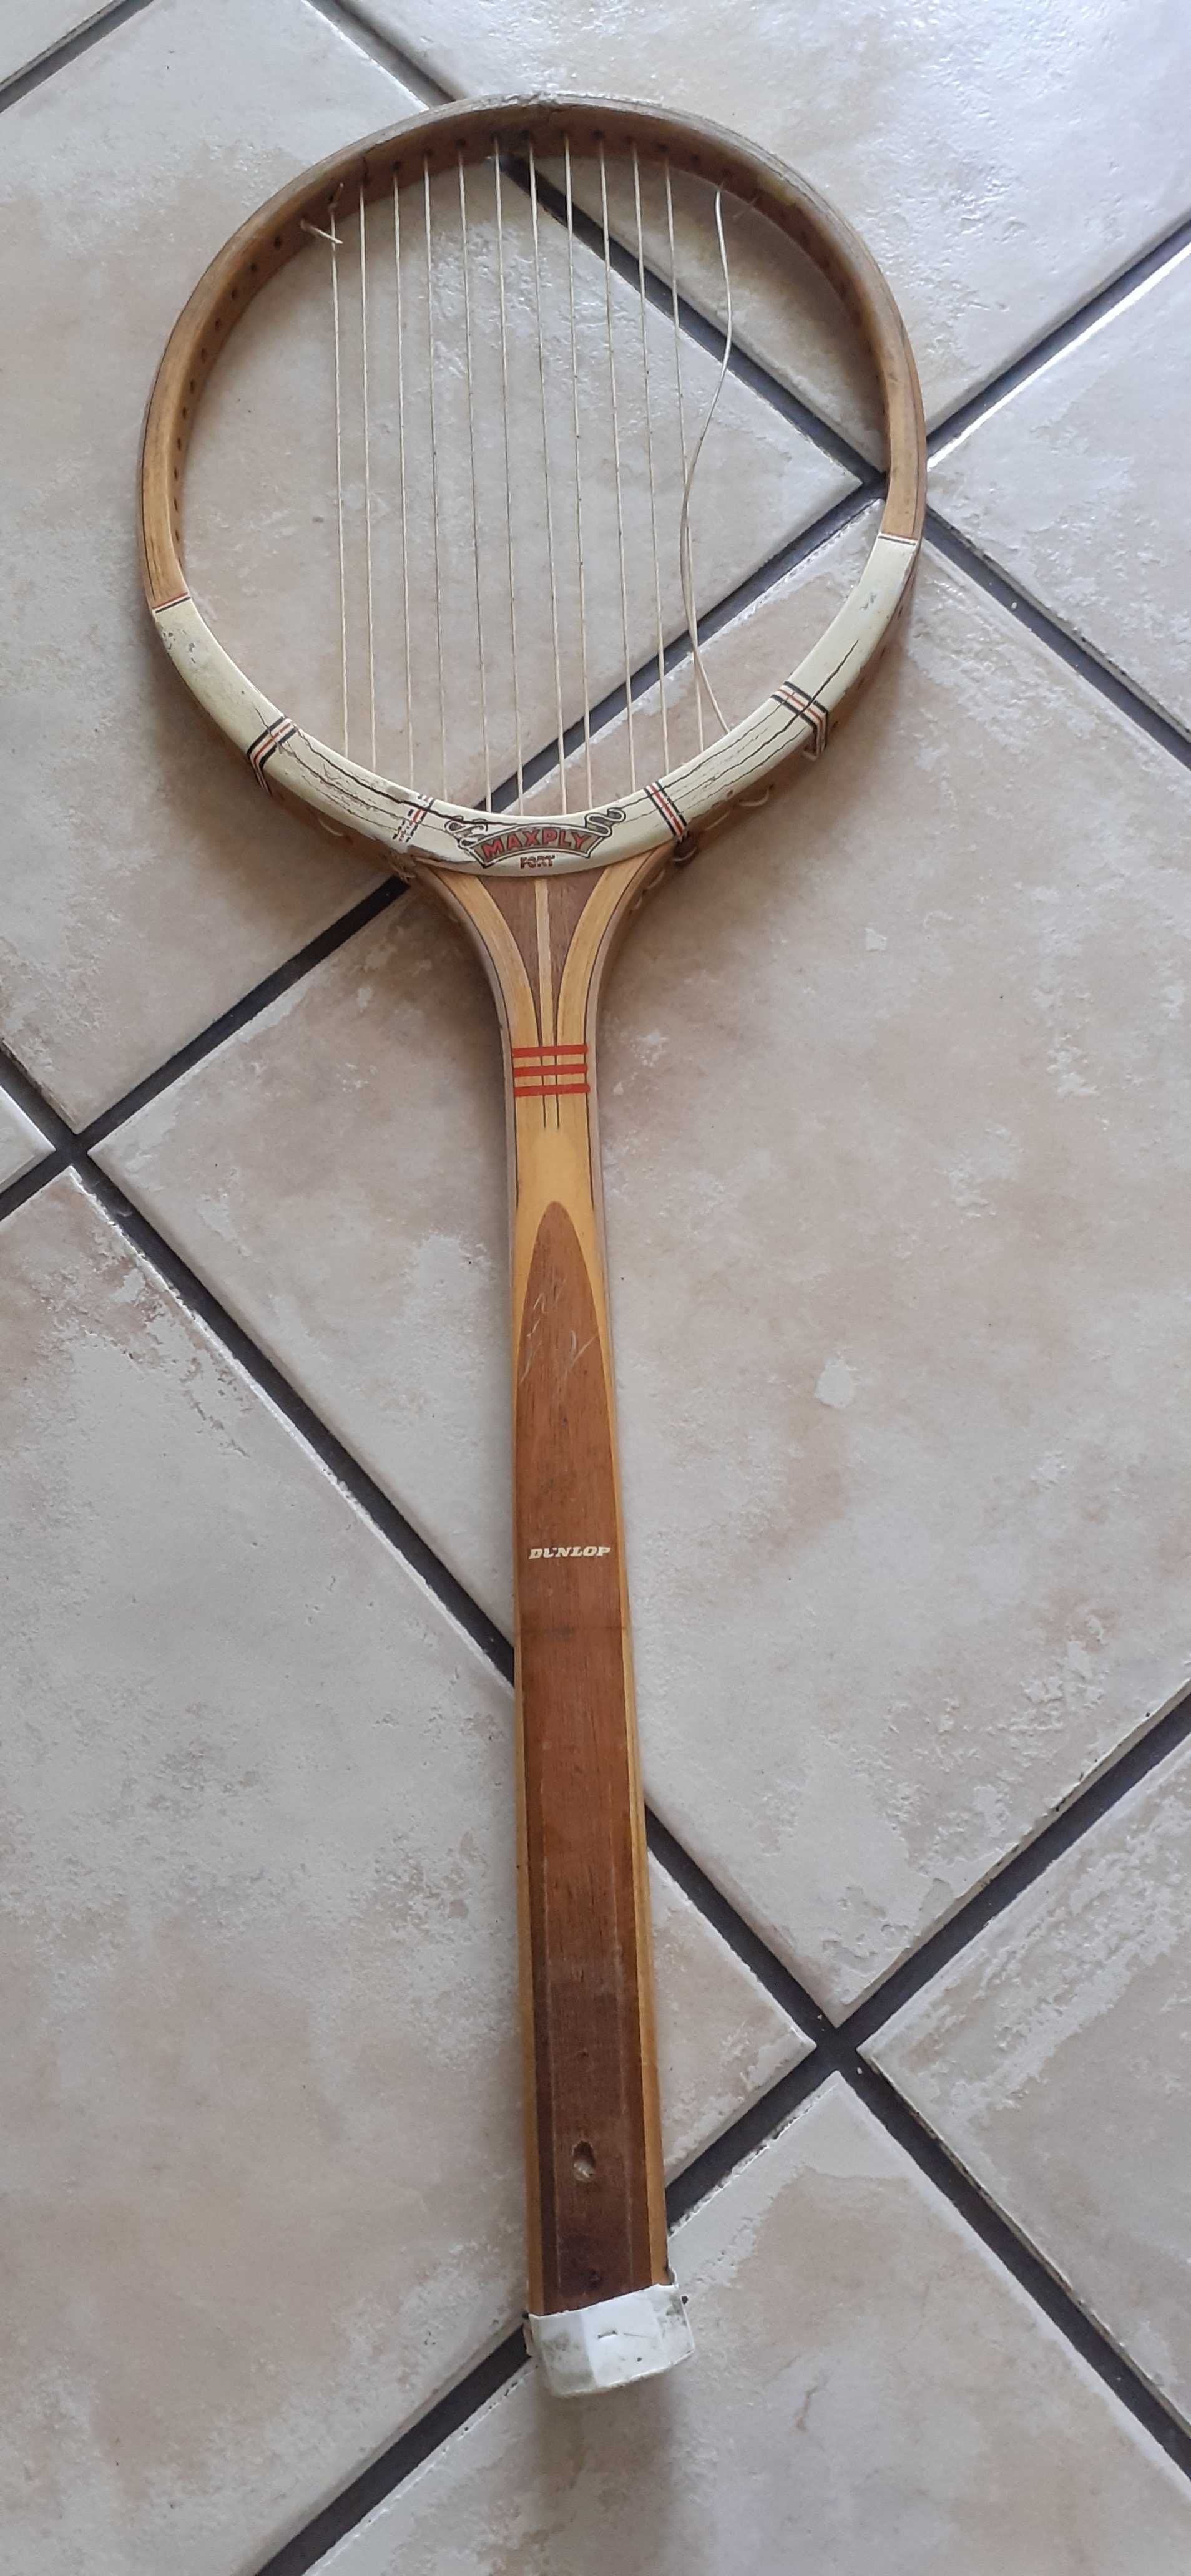 Drewniana rakieta tenisowa Dunlop, retro